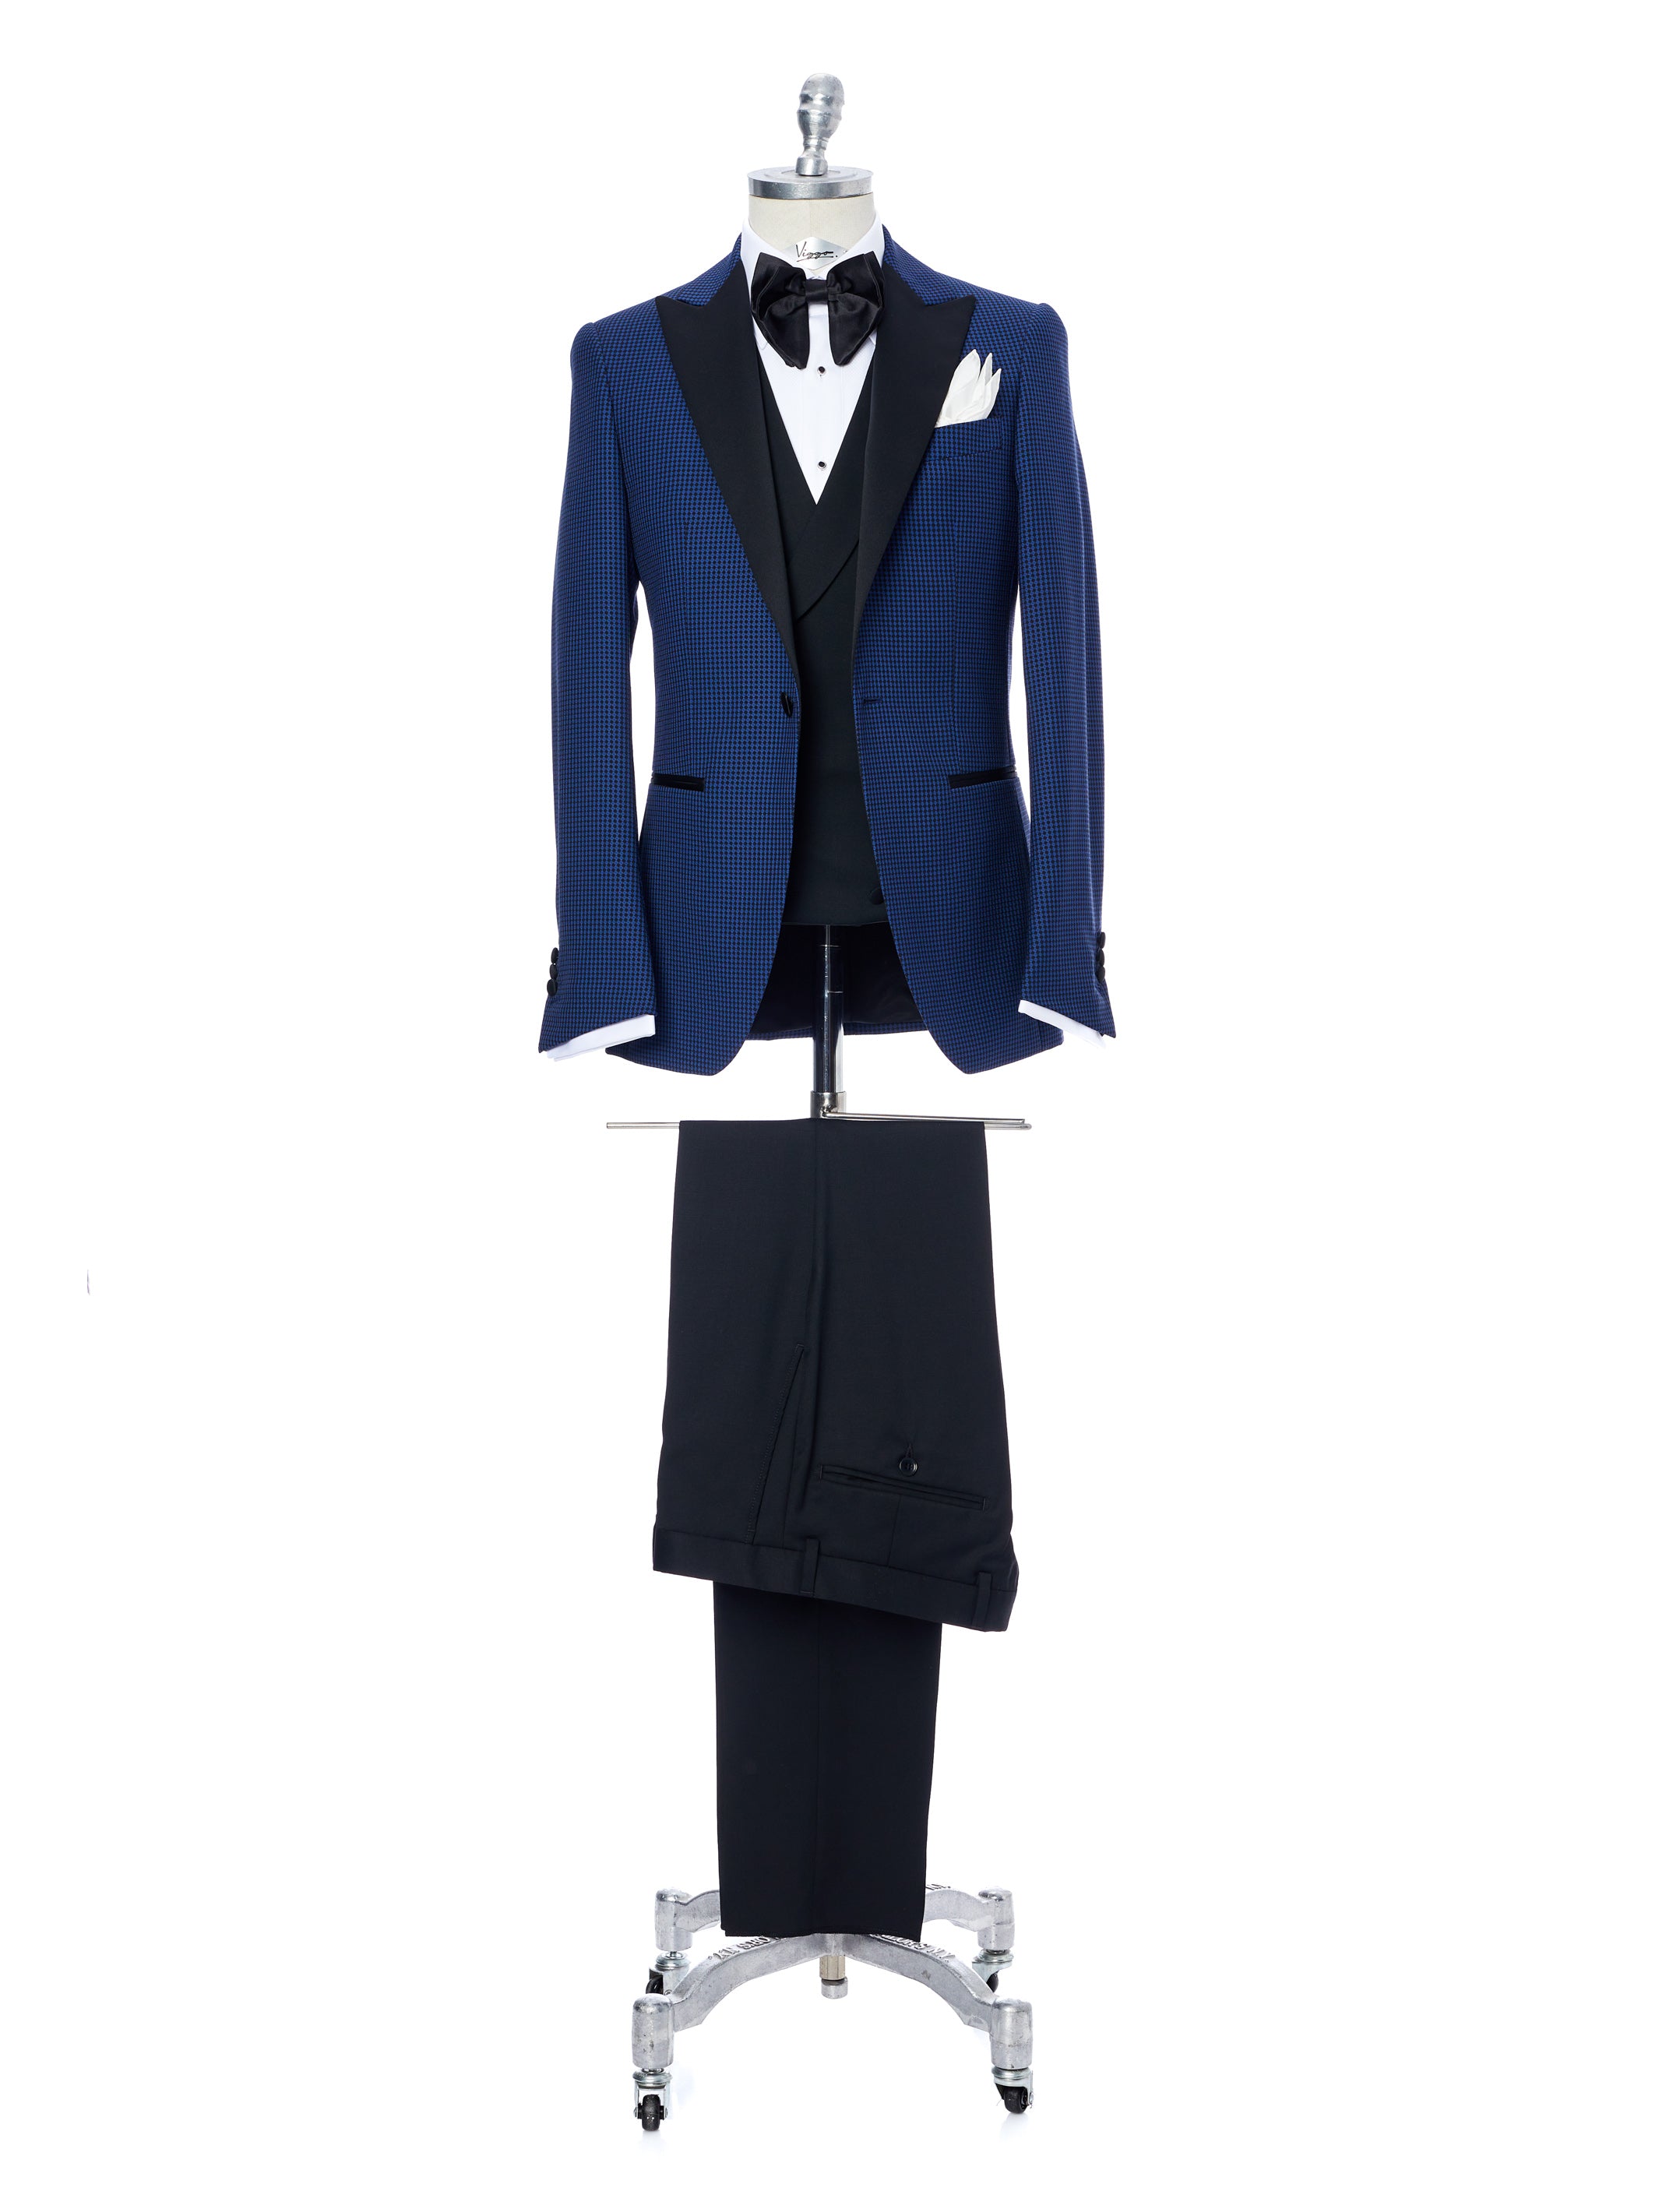 Black tuxedo with blue inserts